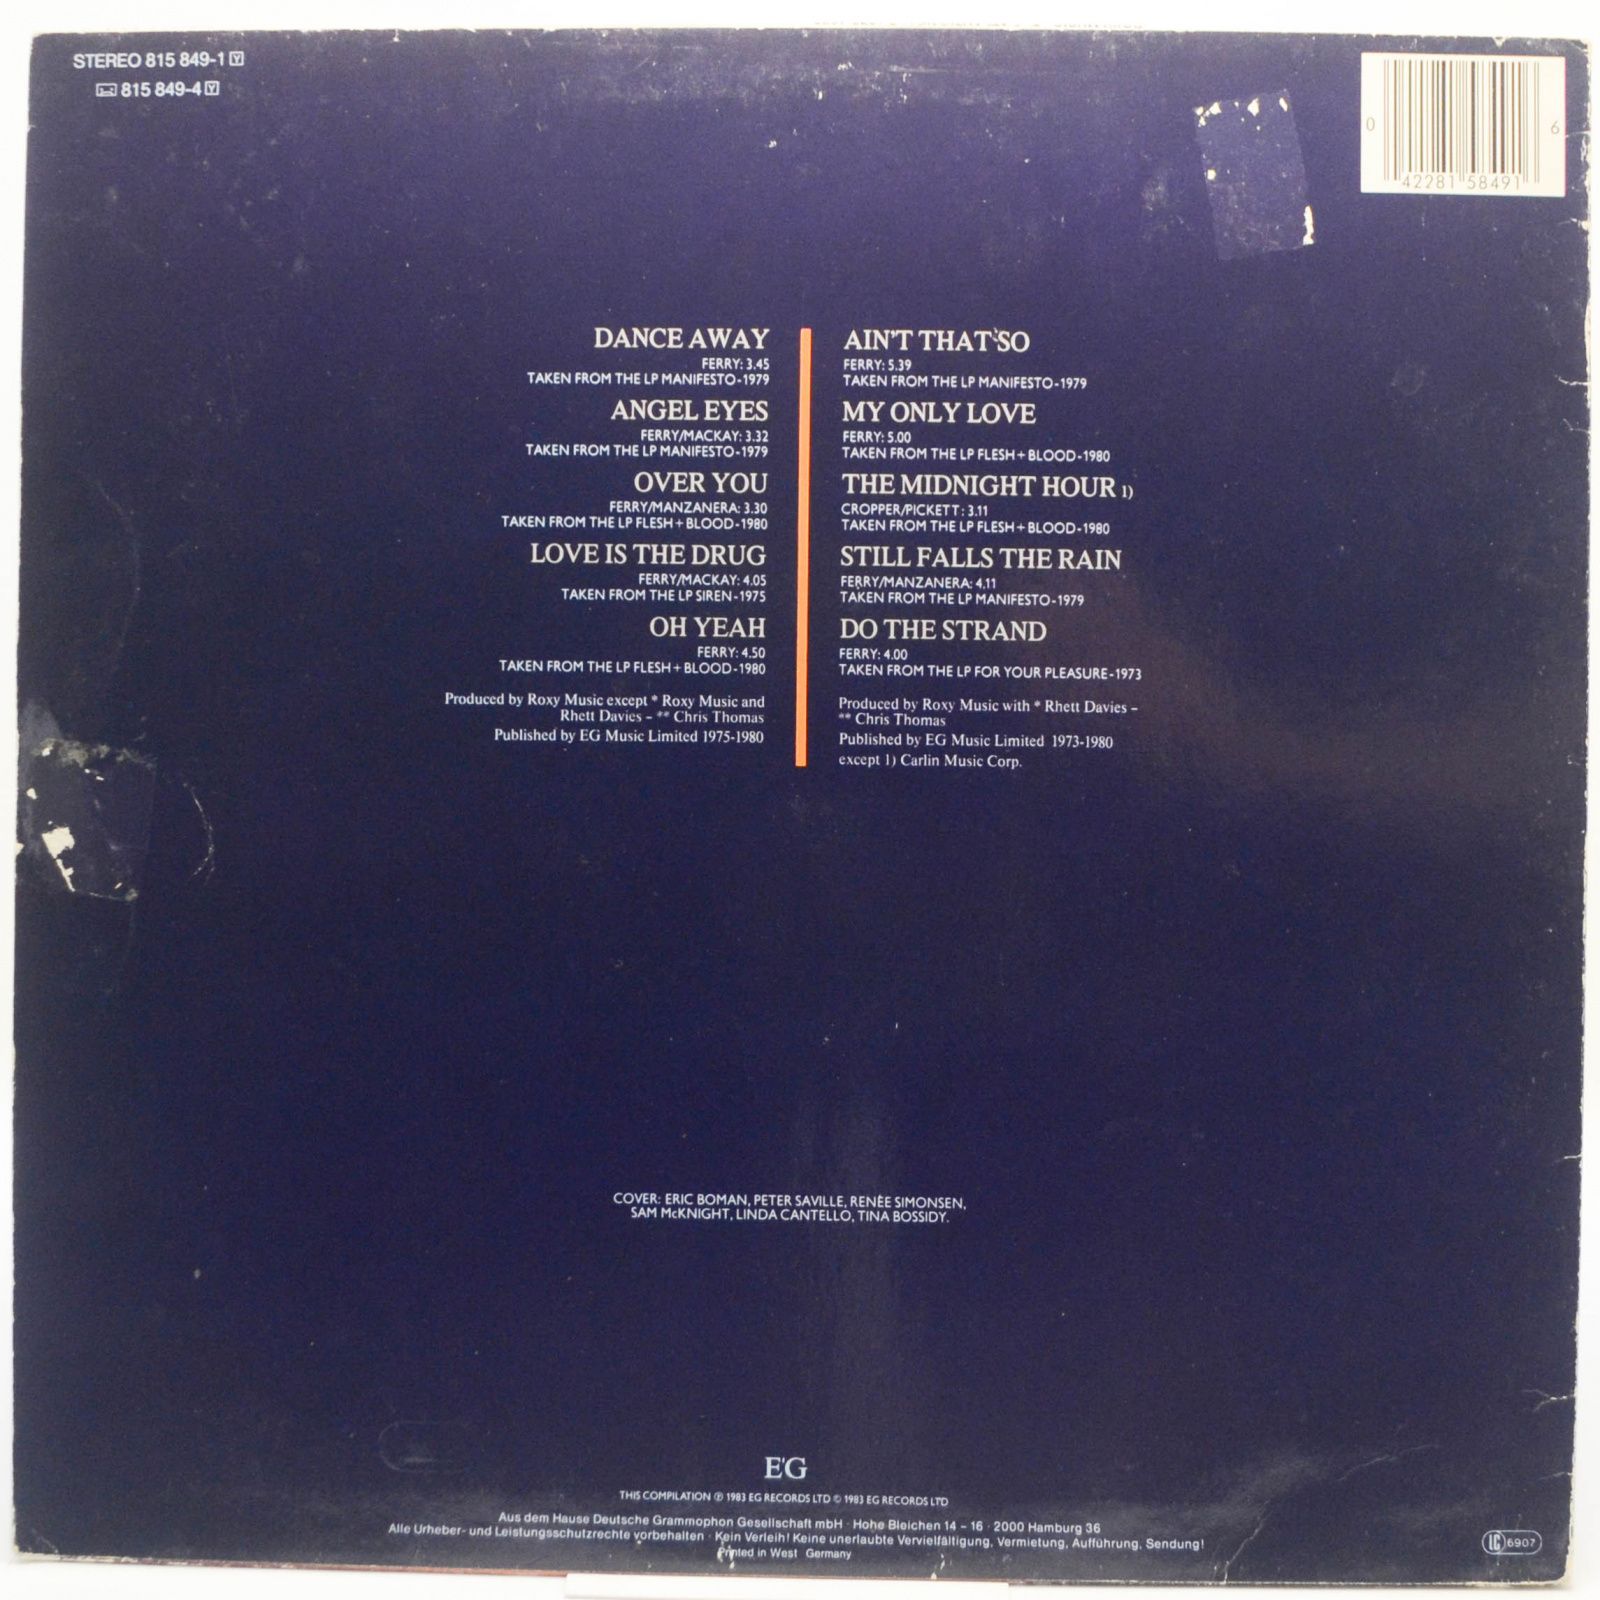 Roxy Music — The Atlantic Years 1973 - 1980, 1983